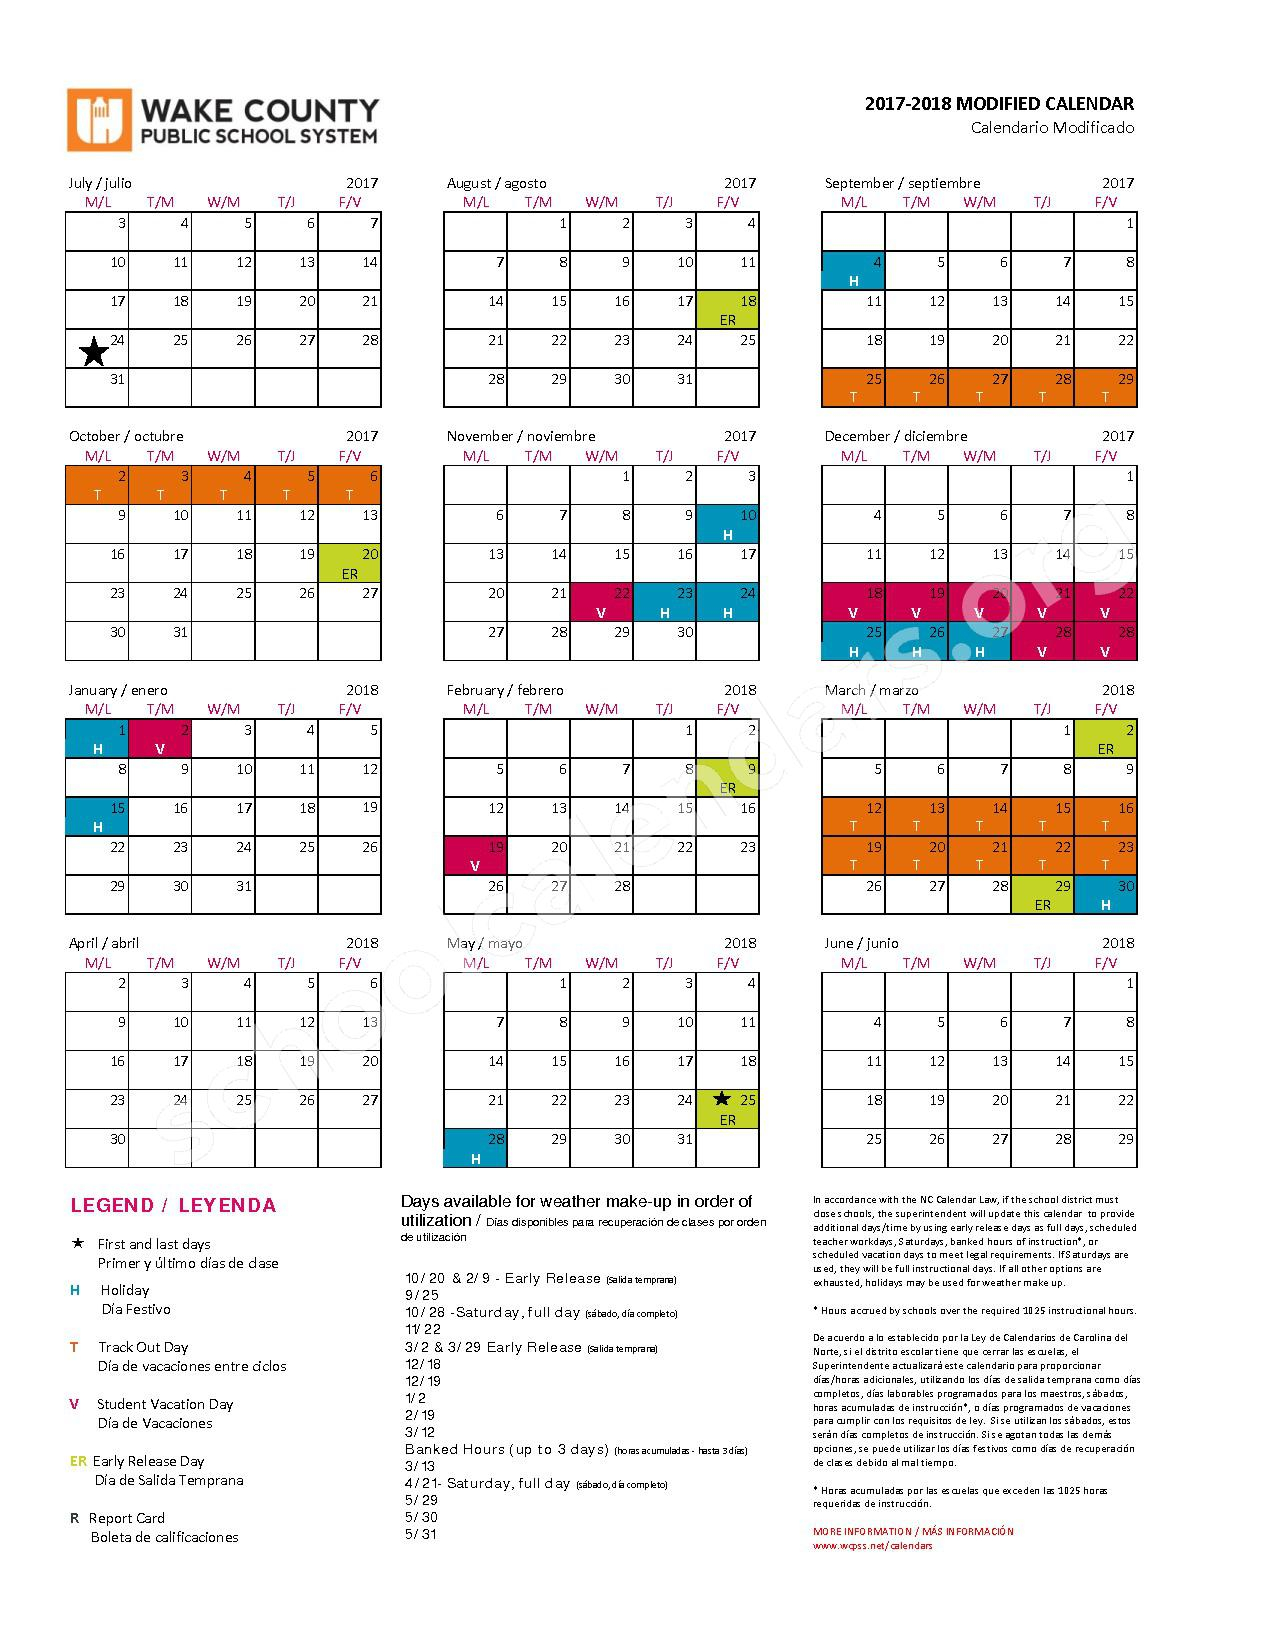 Wake County School Calendar 202222 Year Round 2022